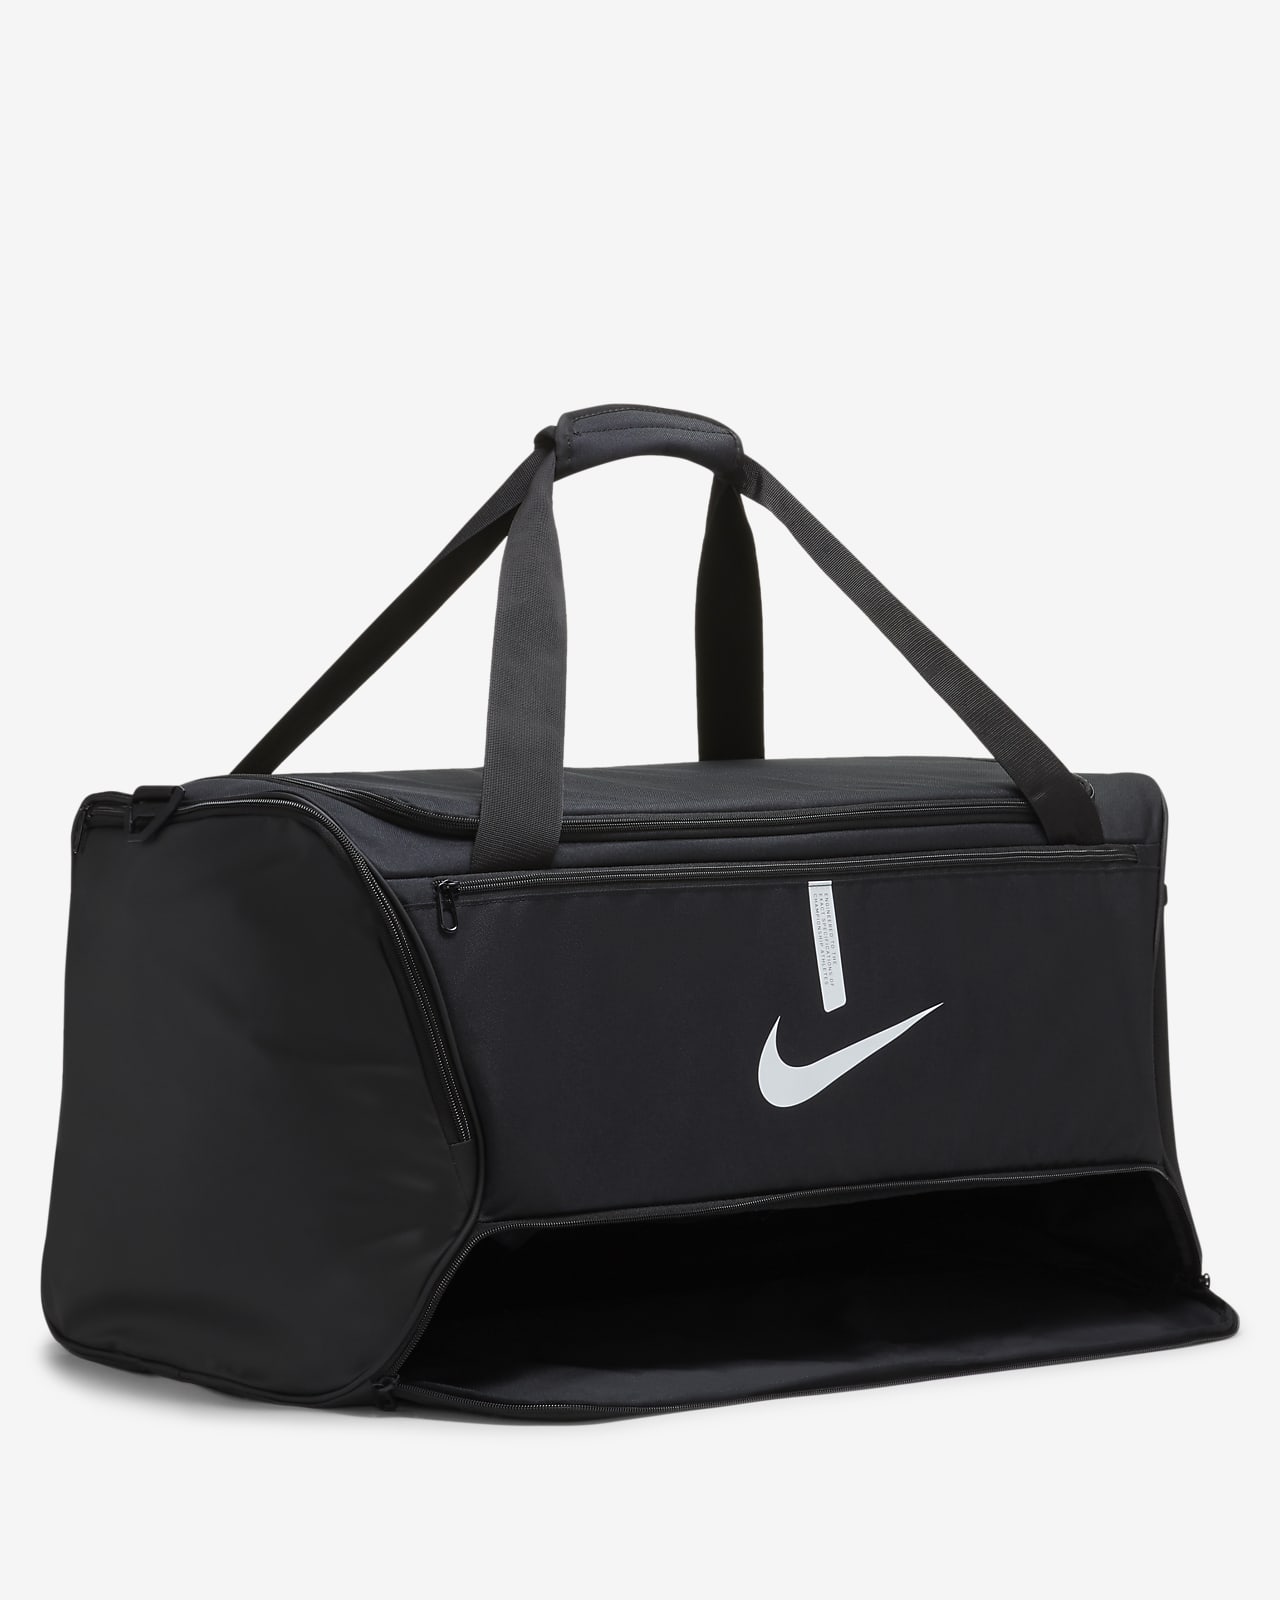 Nike Academy Team Football Duffel Bag (Large, 95L)